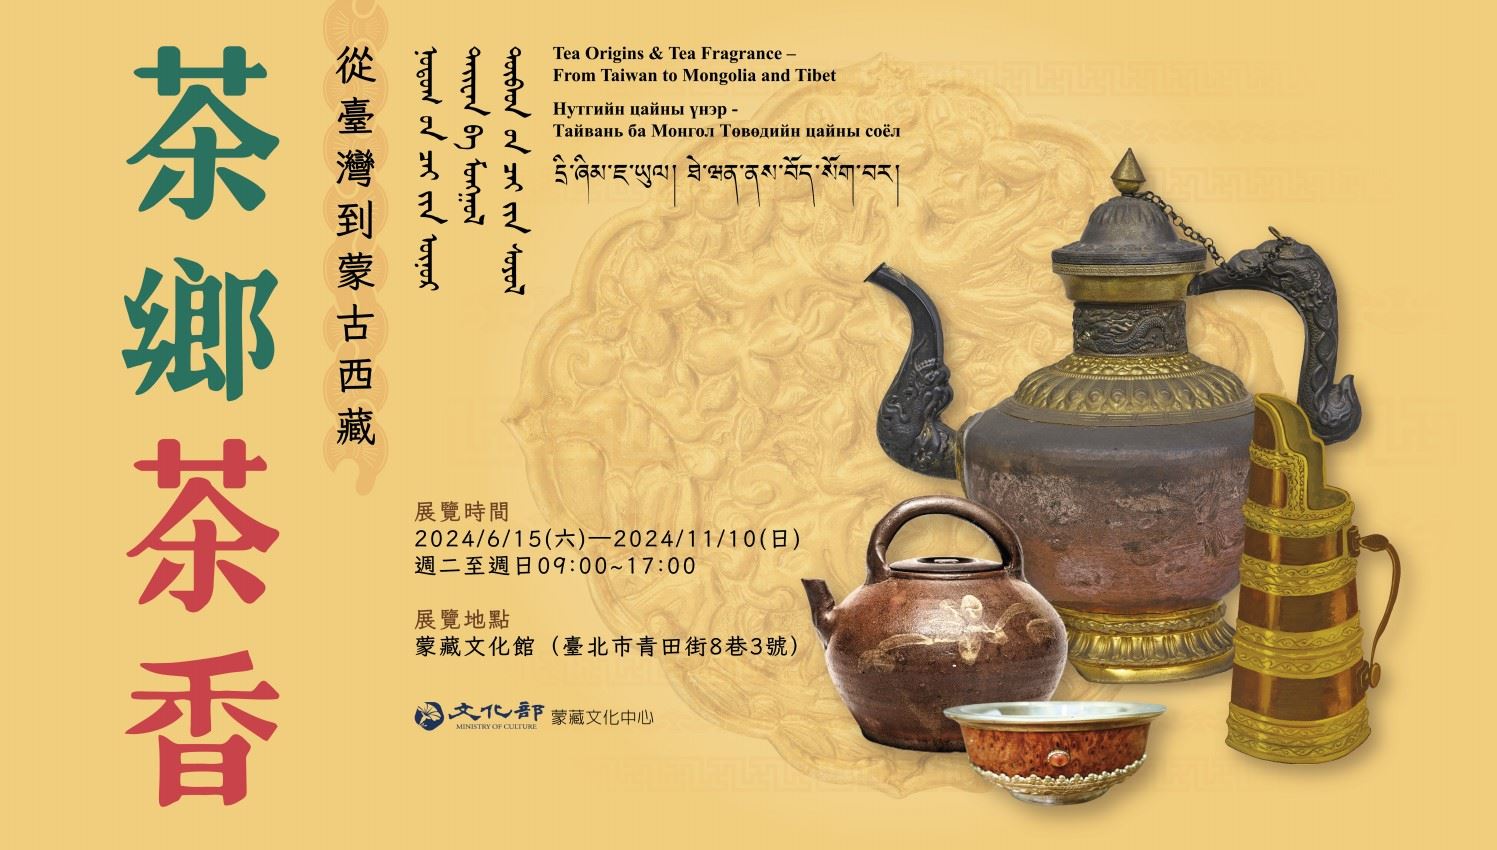 茶文化を紹介する「茶郷茶香―従台湾到蒙古西蔵」、蒙蔵文化館で開催